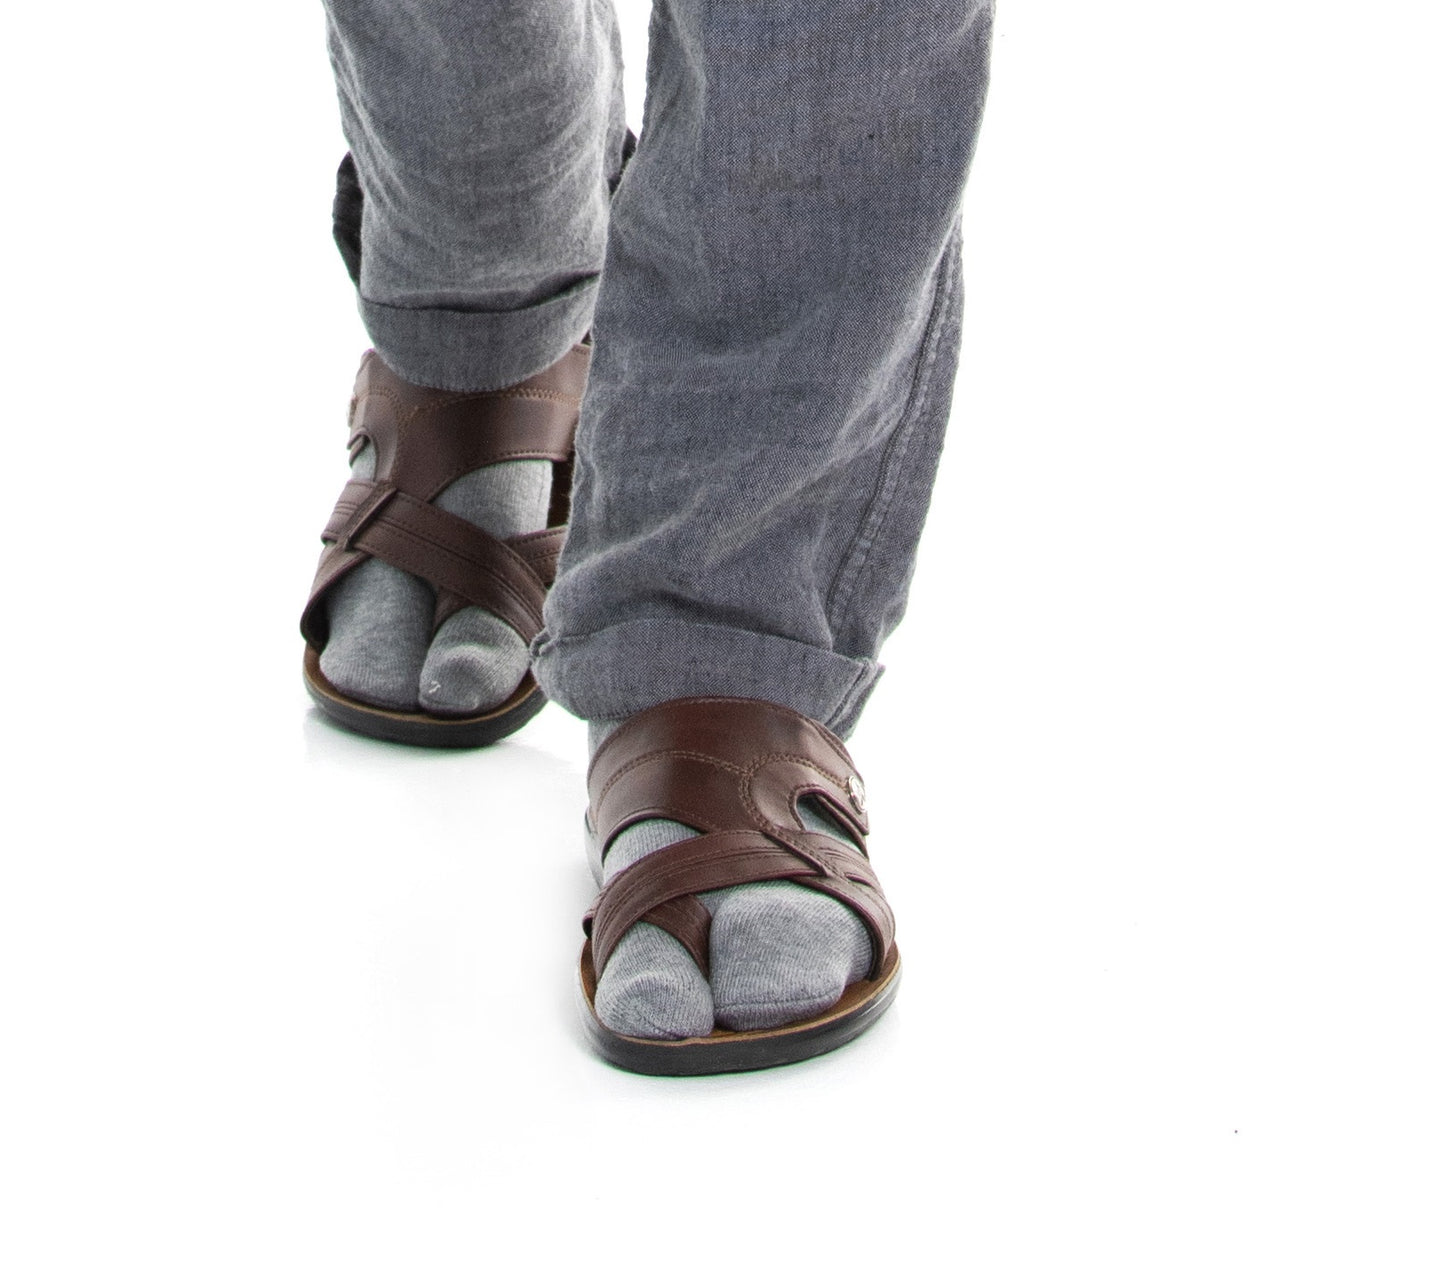 V-Toe Flip-Flop Socks Brand 3 Pairs Thicker Mini Crew - Black, White, Grey Solids